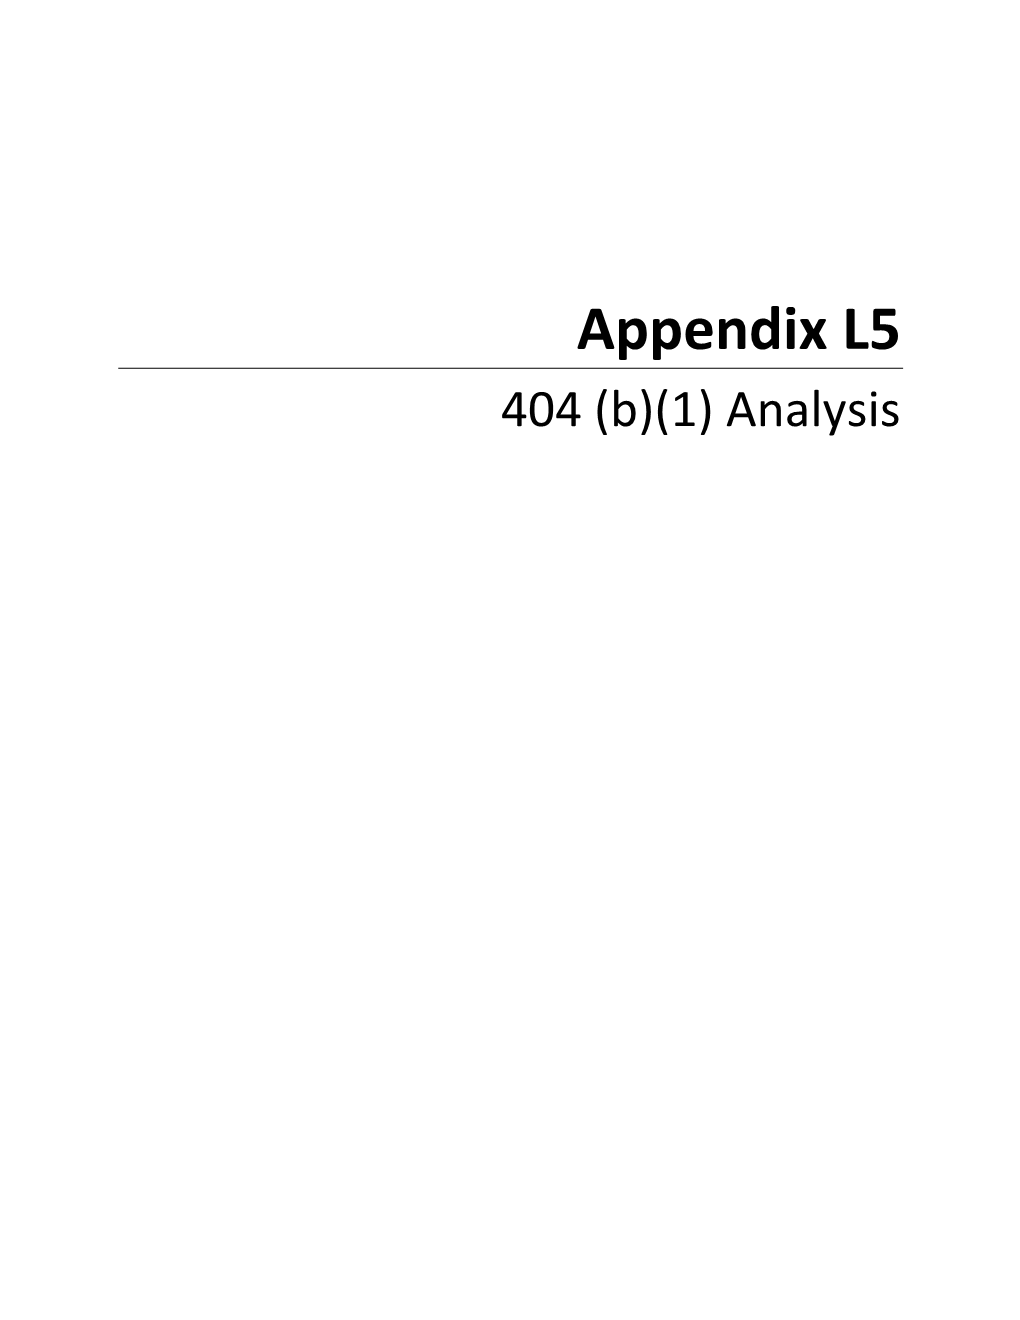 Appendix L5 404 (B)(1) Analysis